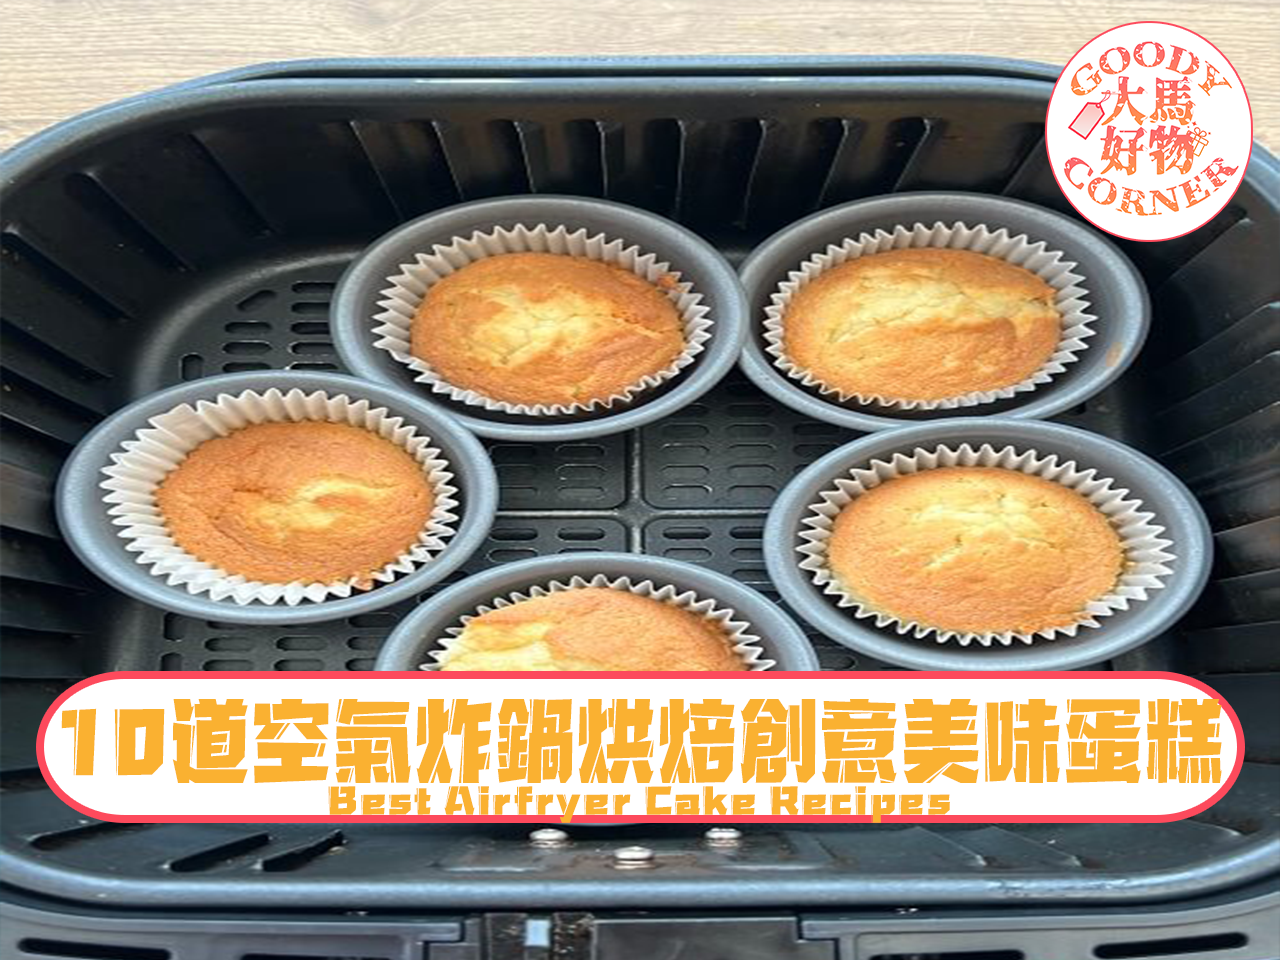 Best Airfryer Cake Recipes 10道空氣炸鍋烘焙創意美味蛋糕